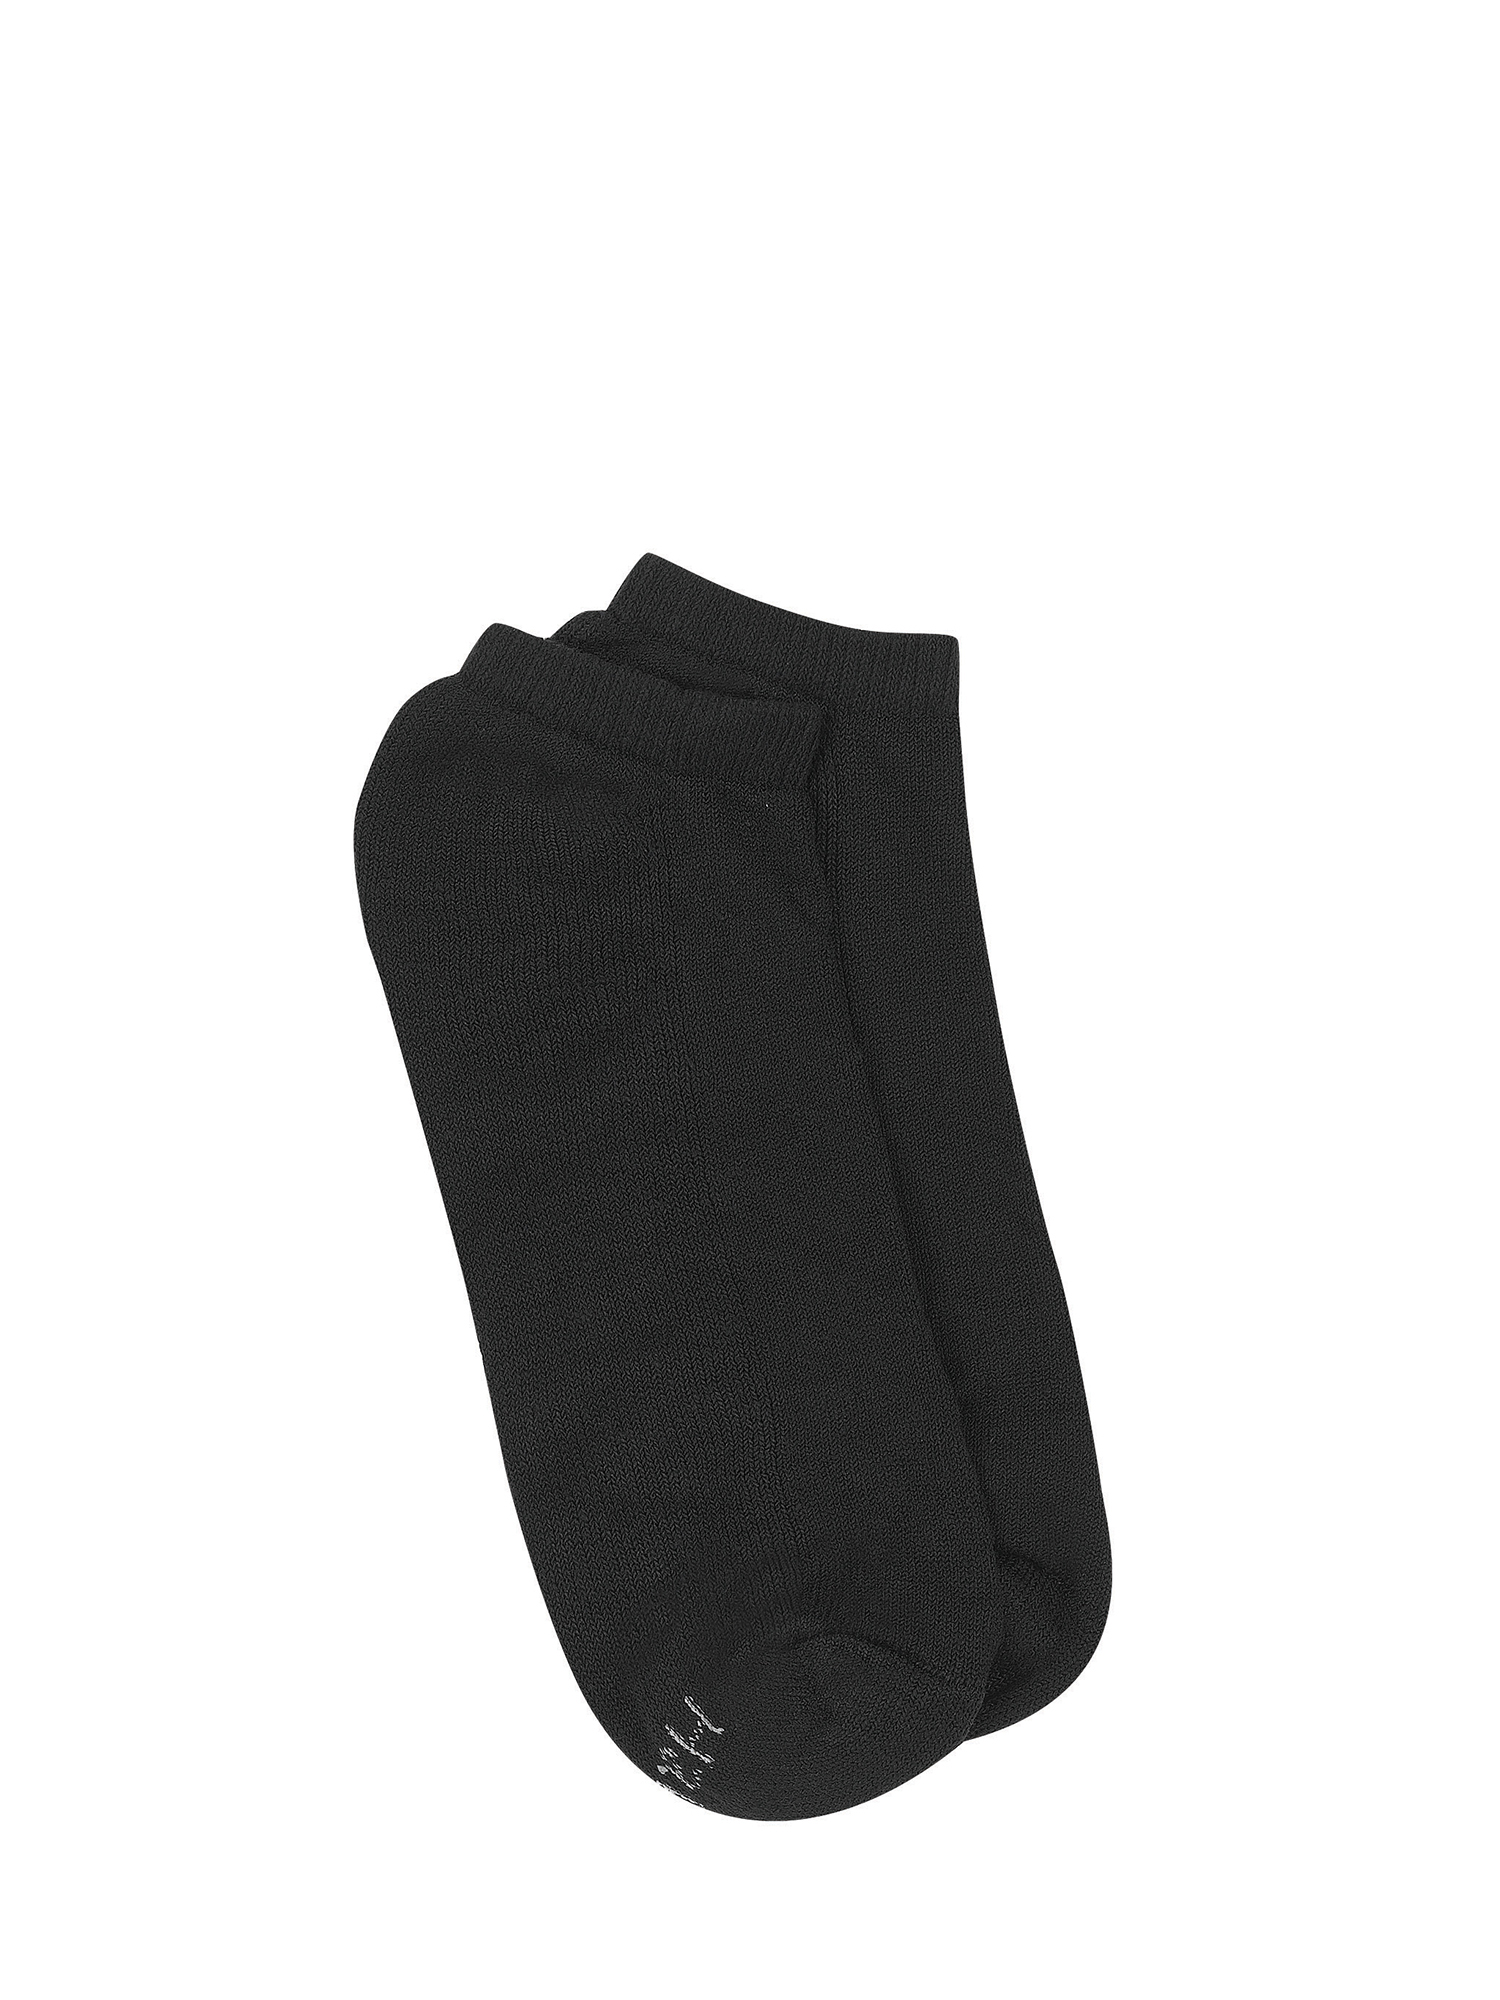 Hanes Men's Cushion No Show Socks, 12 Pack - image 4 of 8